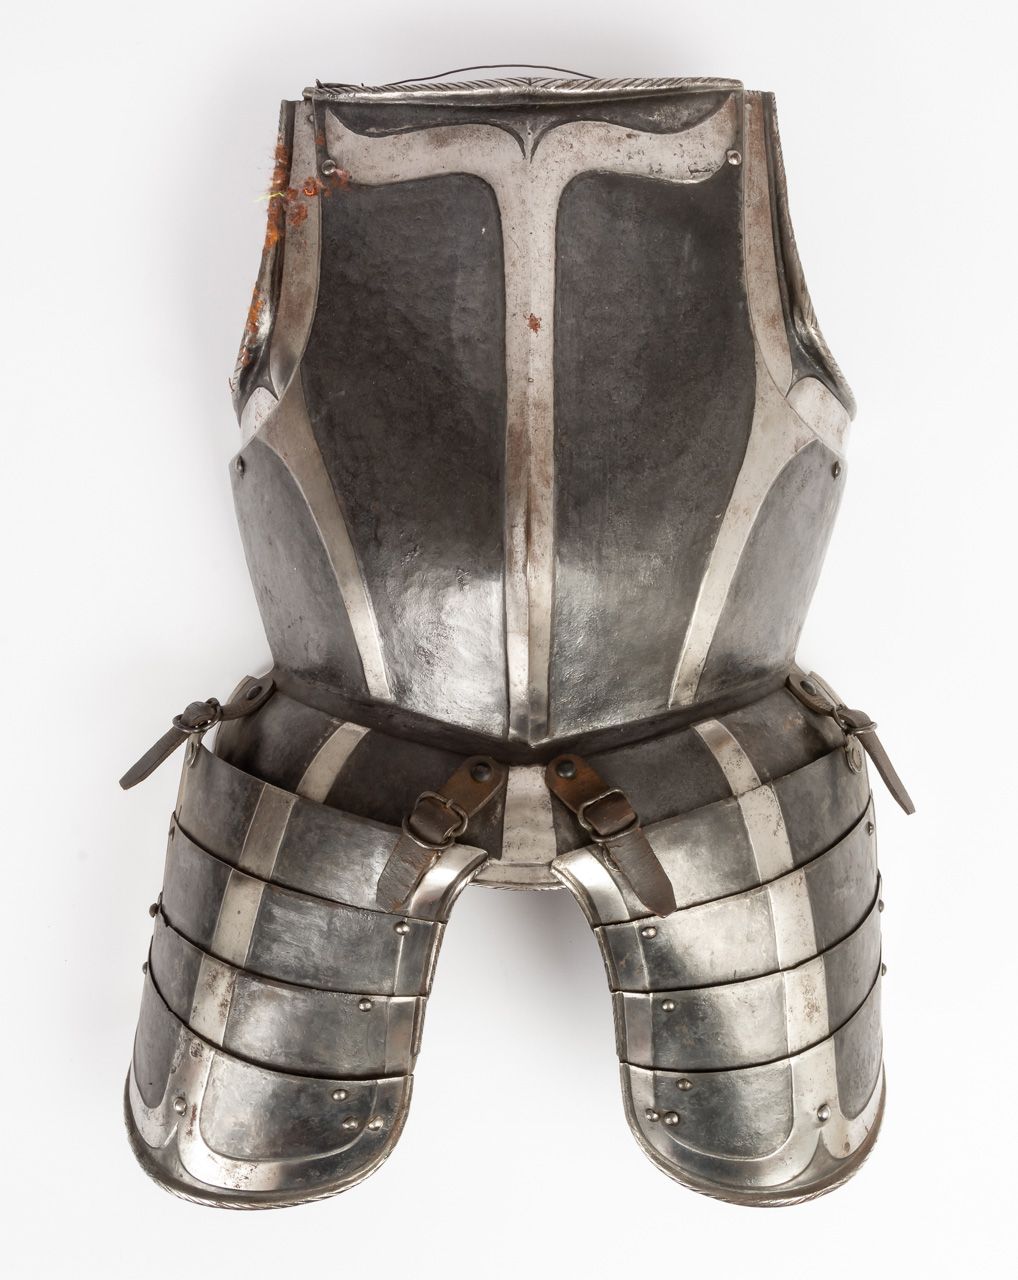 KNECHTISCHER HARNISCH 黑白相间的设计，精心制作的表格。皮扣铆接在腹带上，用于四肢的缝合。锈斑。德国，约1580年。

高：58厘米